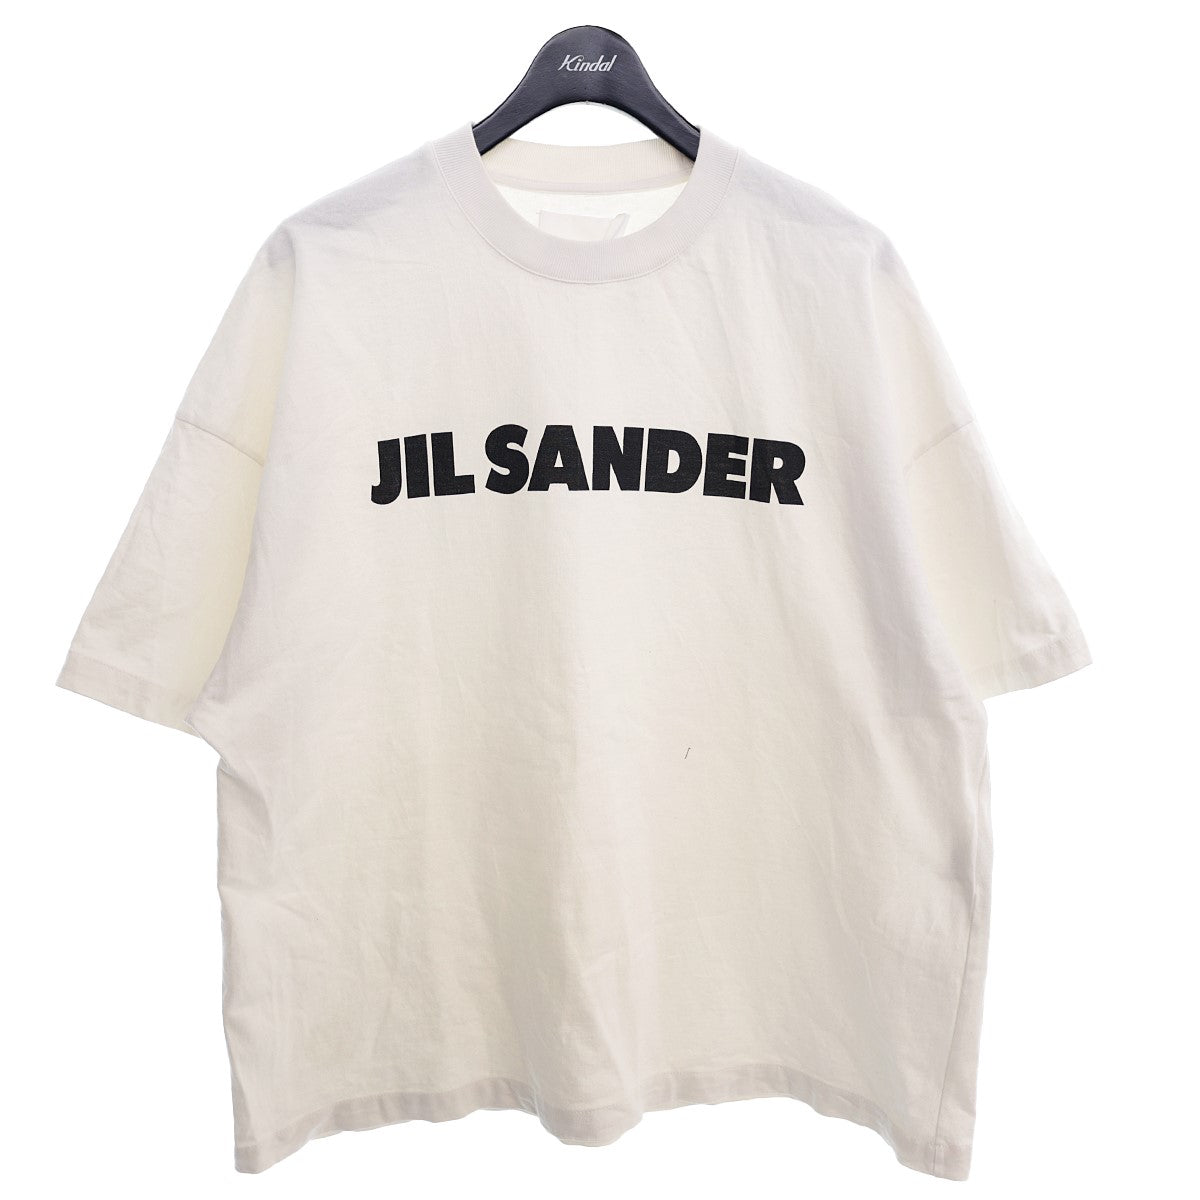 JIL SANDER(ジルサンダー) ロゴプリント半袖Tシャツ JSMS707045 